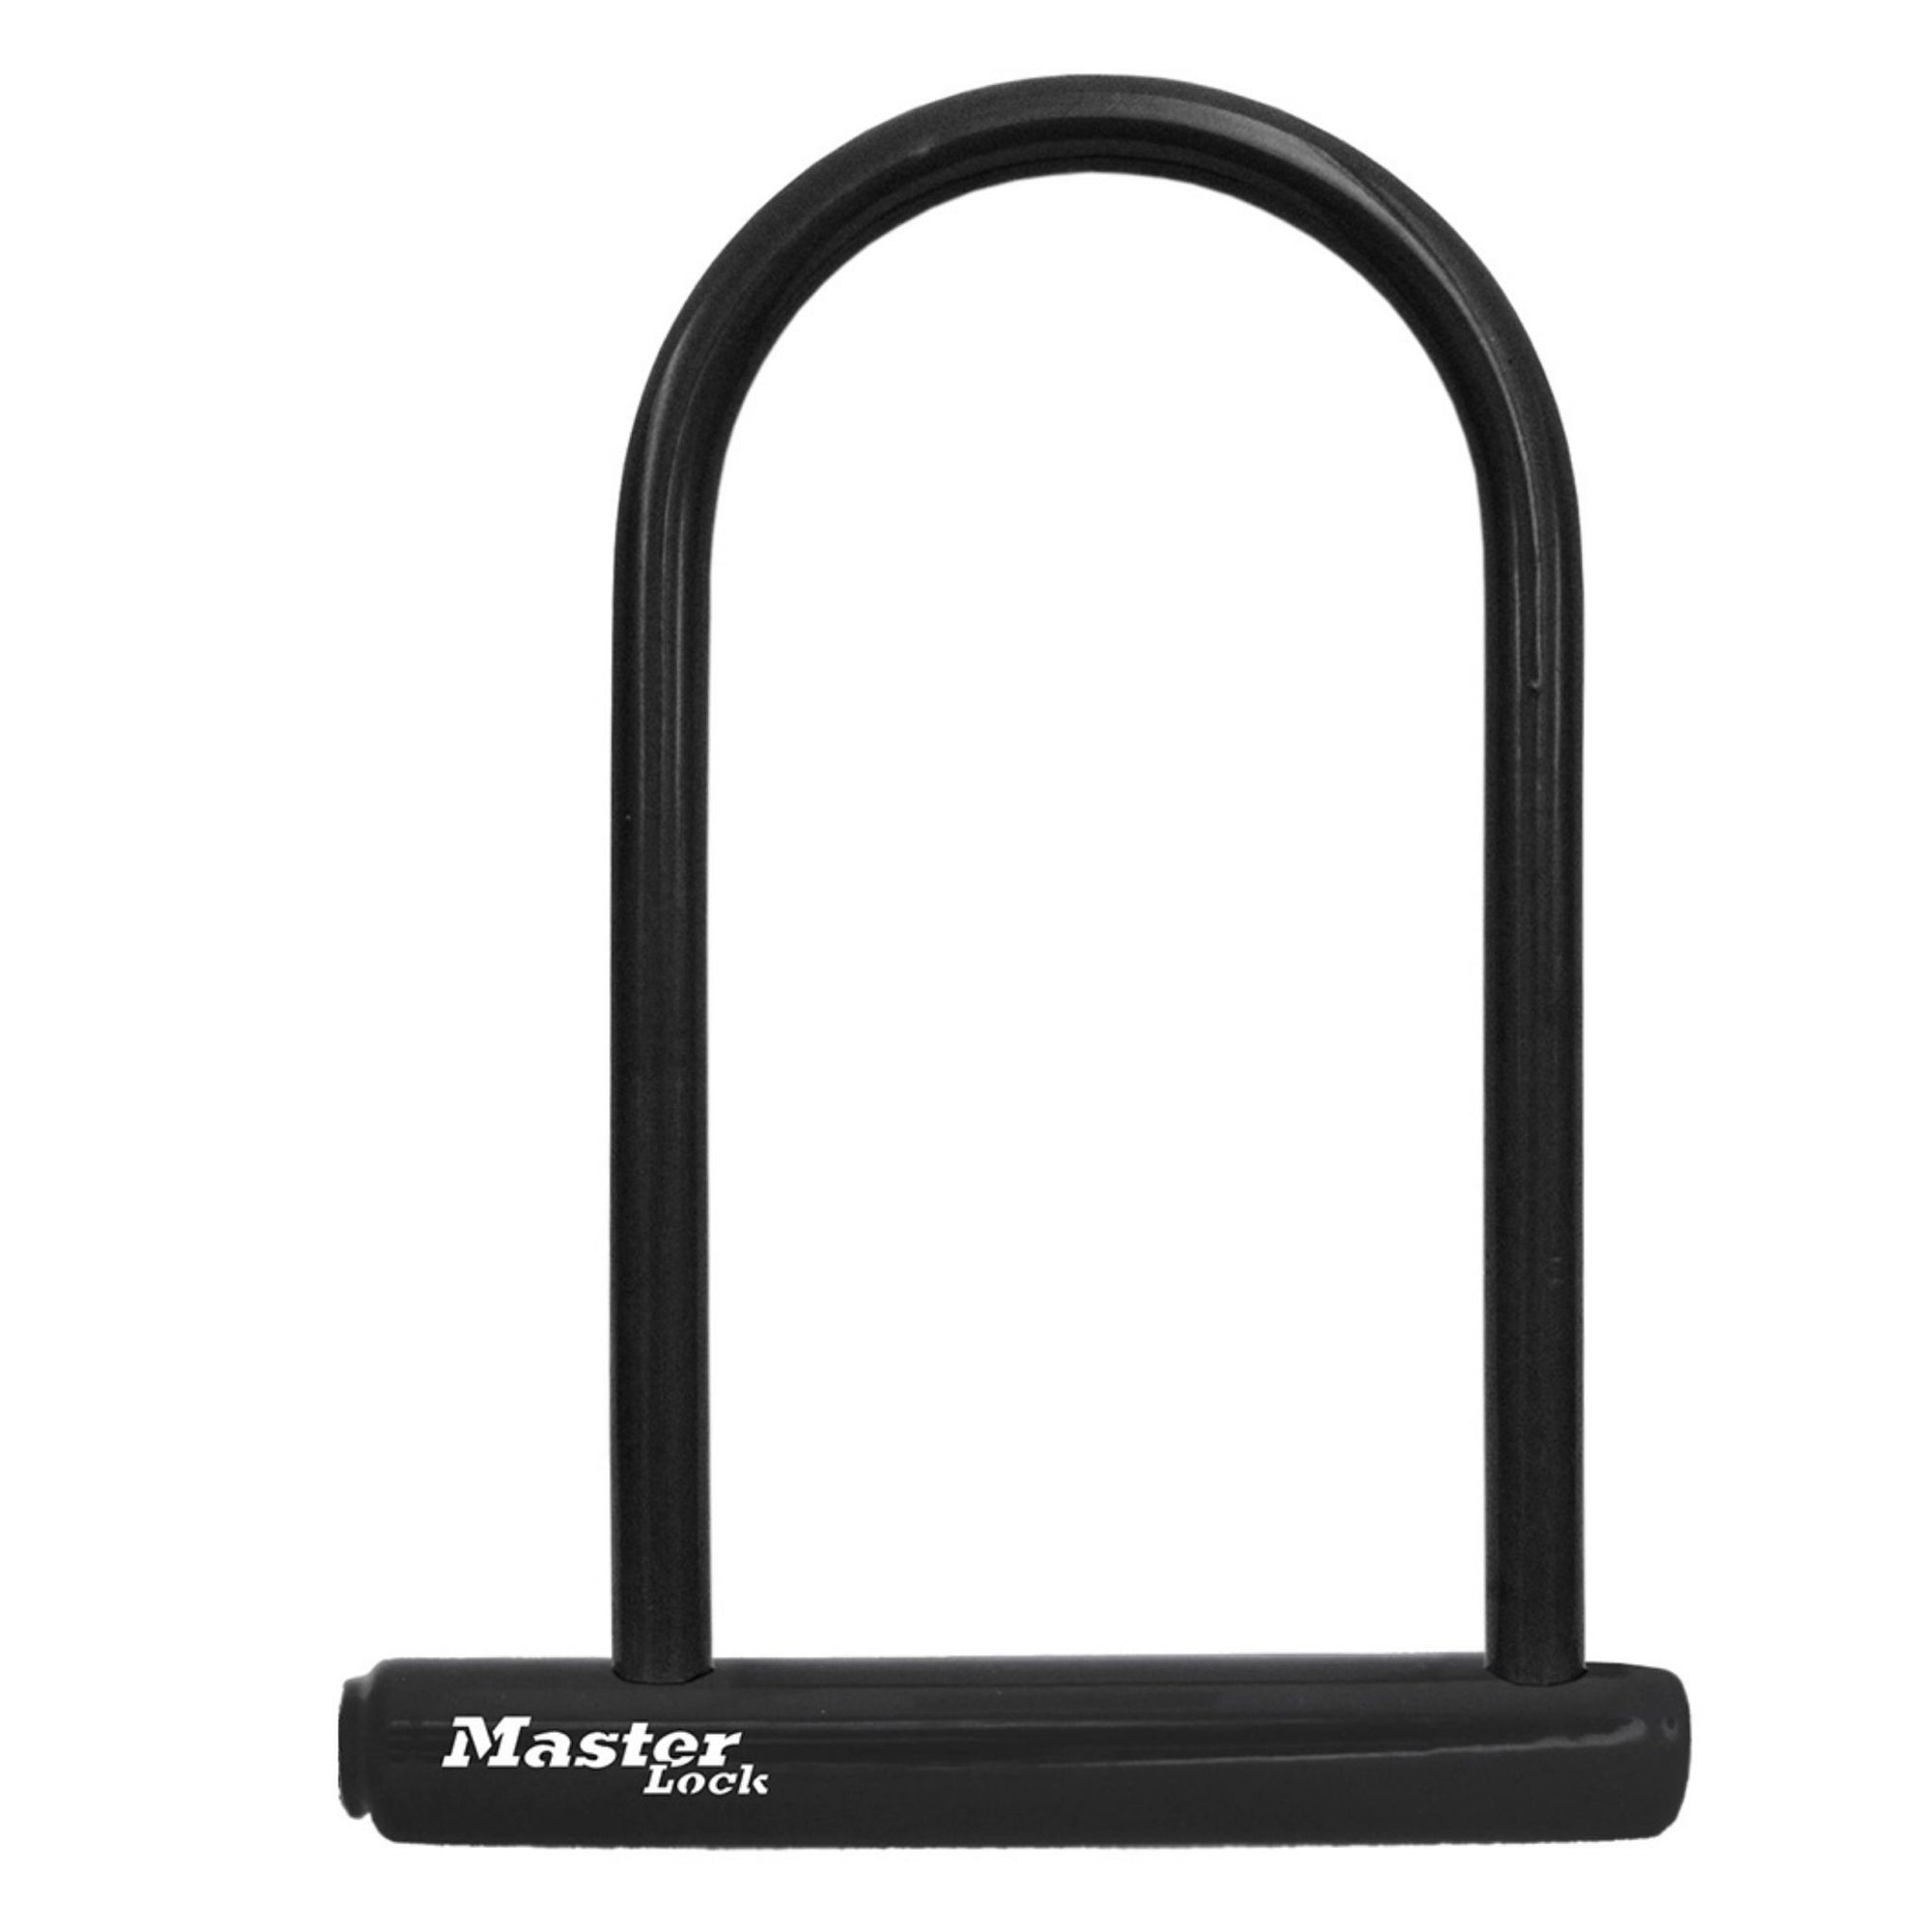 Master Lock No. 8170 Fusion U-Lock Bicycle Padlock - The Lock Source